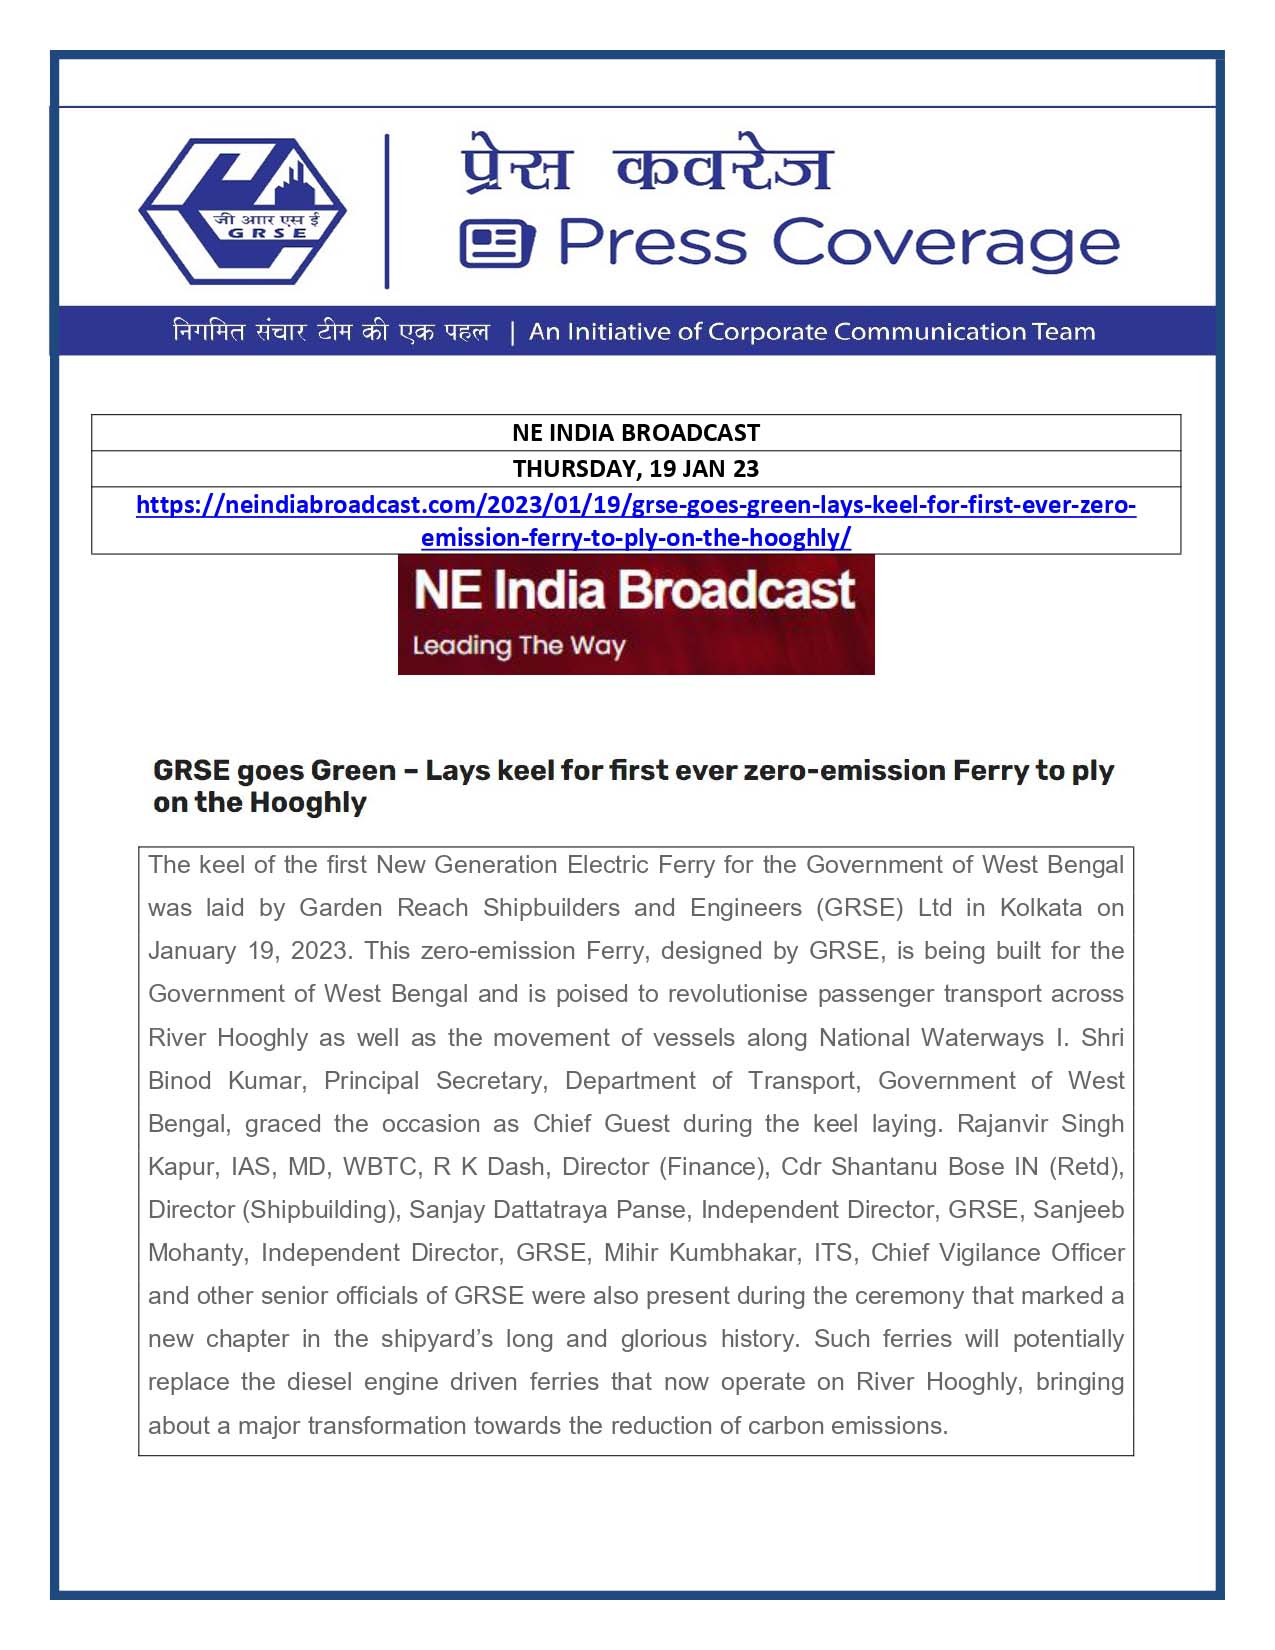 NE India Broadcast 19 Jnn 23